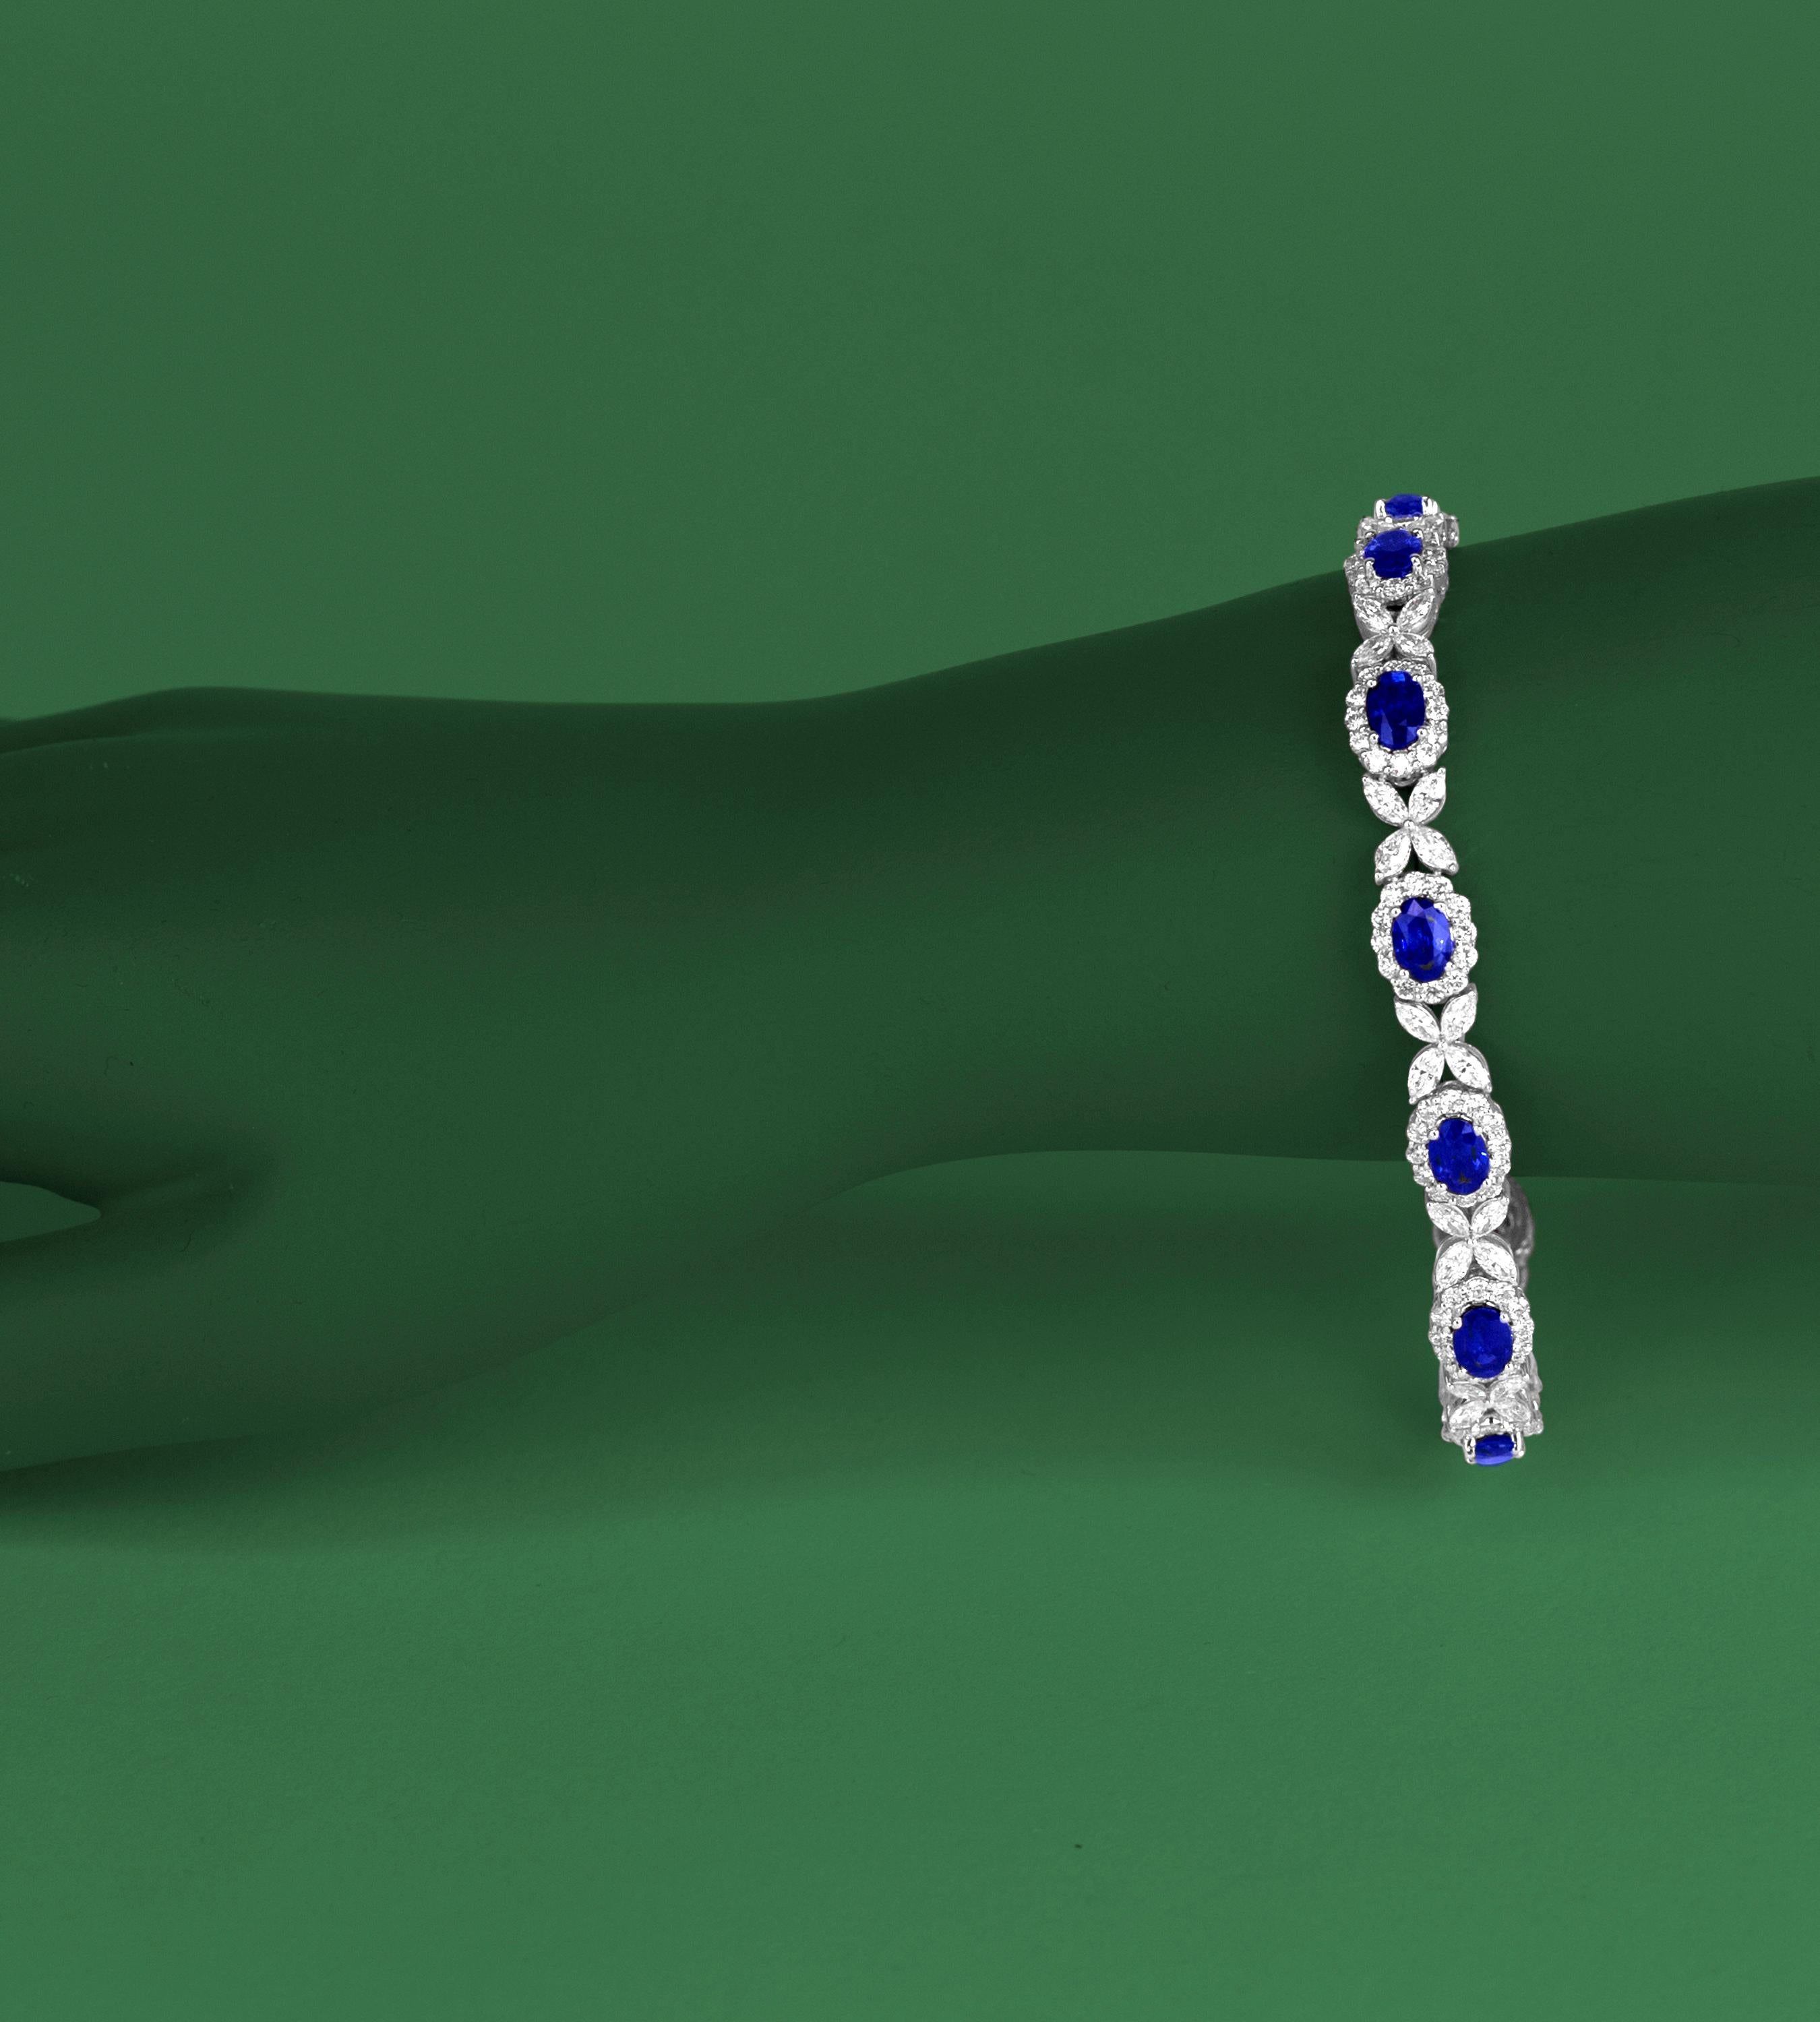 8.14 Carat Oval Cut Vivid Blue Sapphire and 6.95 Carat Diamond Bracelet (Ovalschliff)